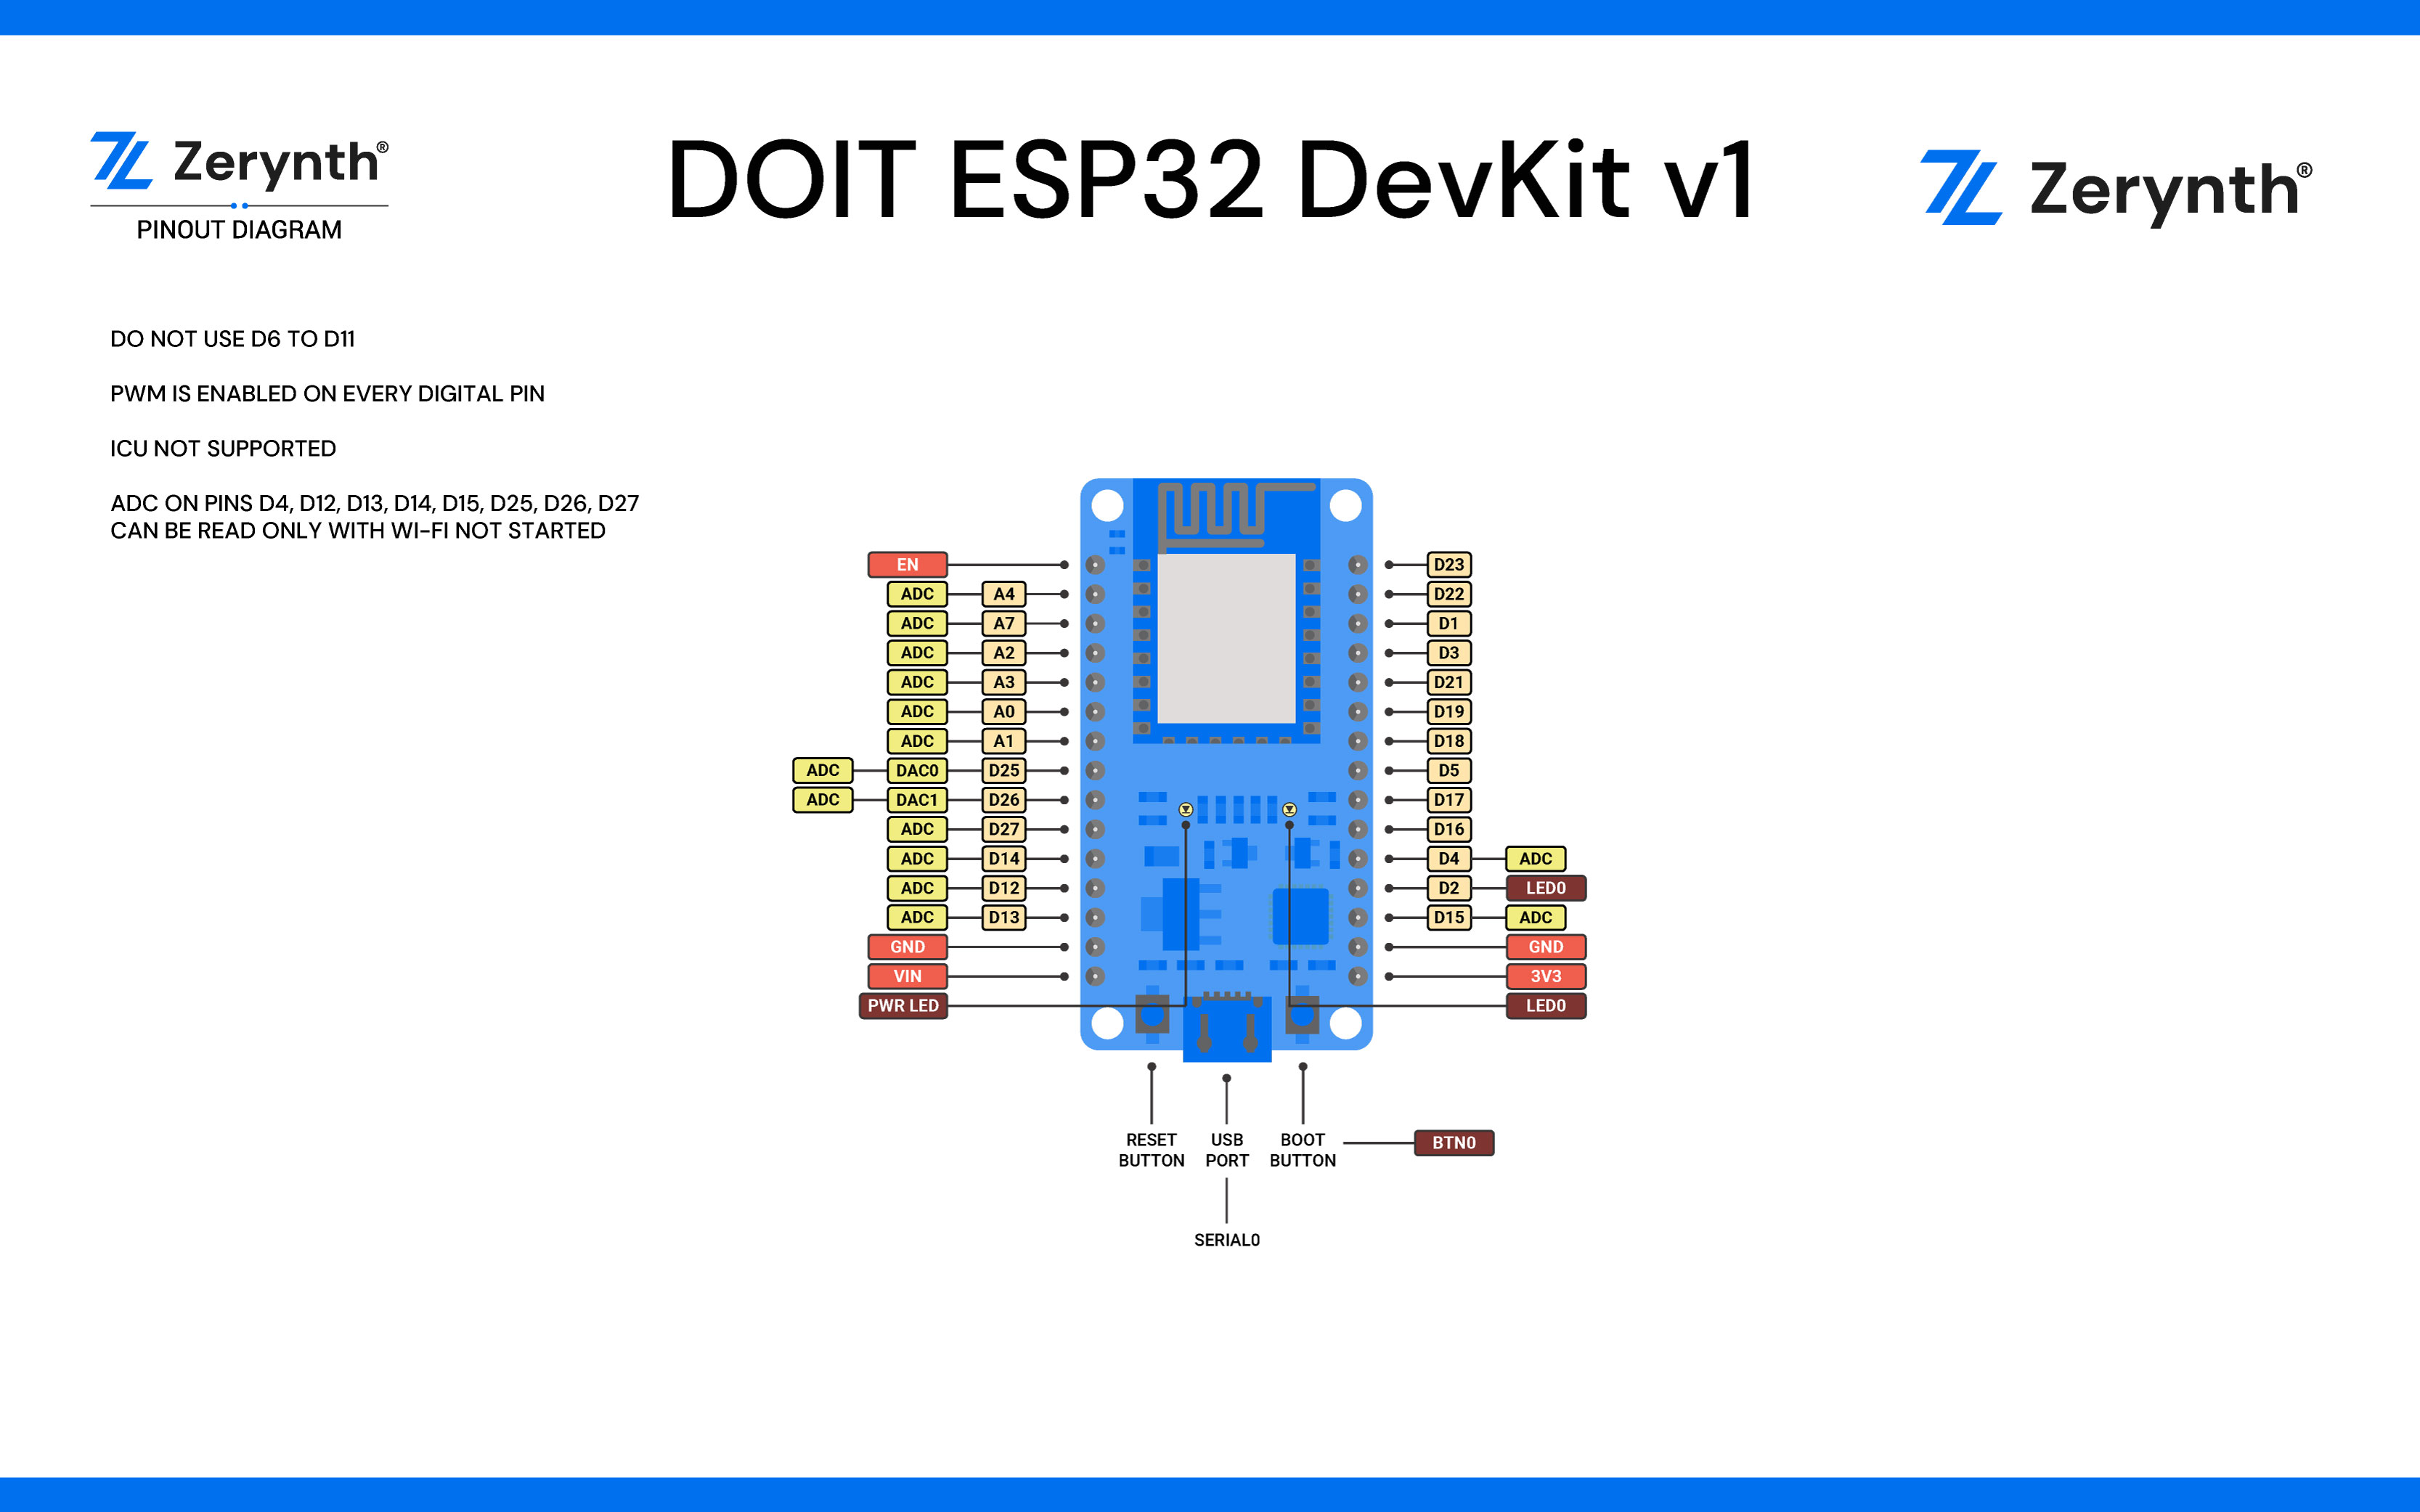 Doit Esp32 Dev Kit V1 High Resolution Pinout And Specs Renzo Mischianti ...